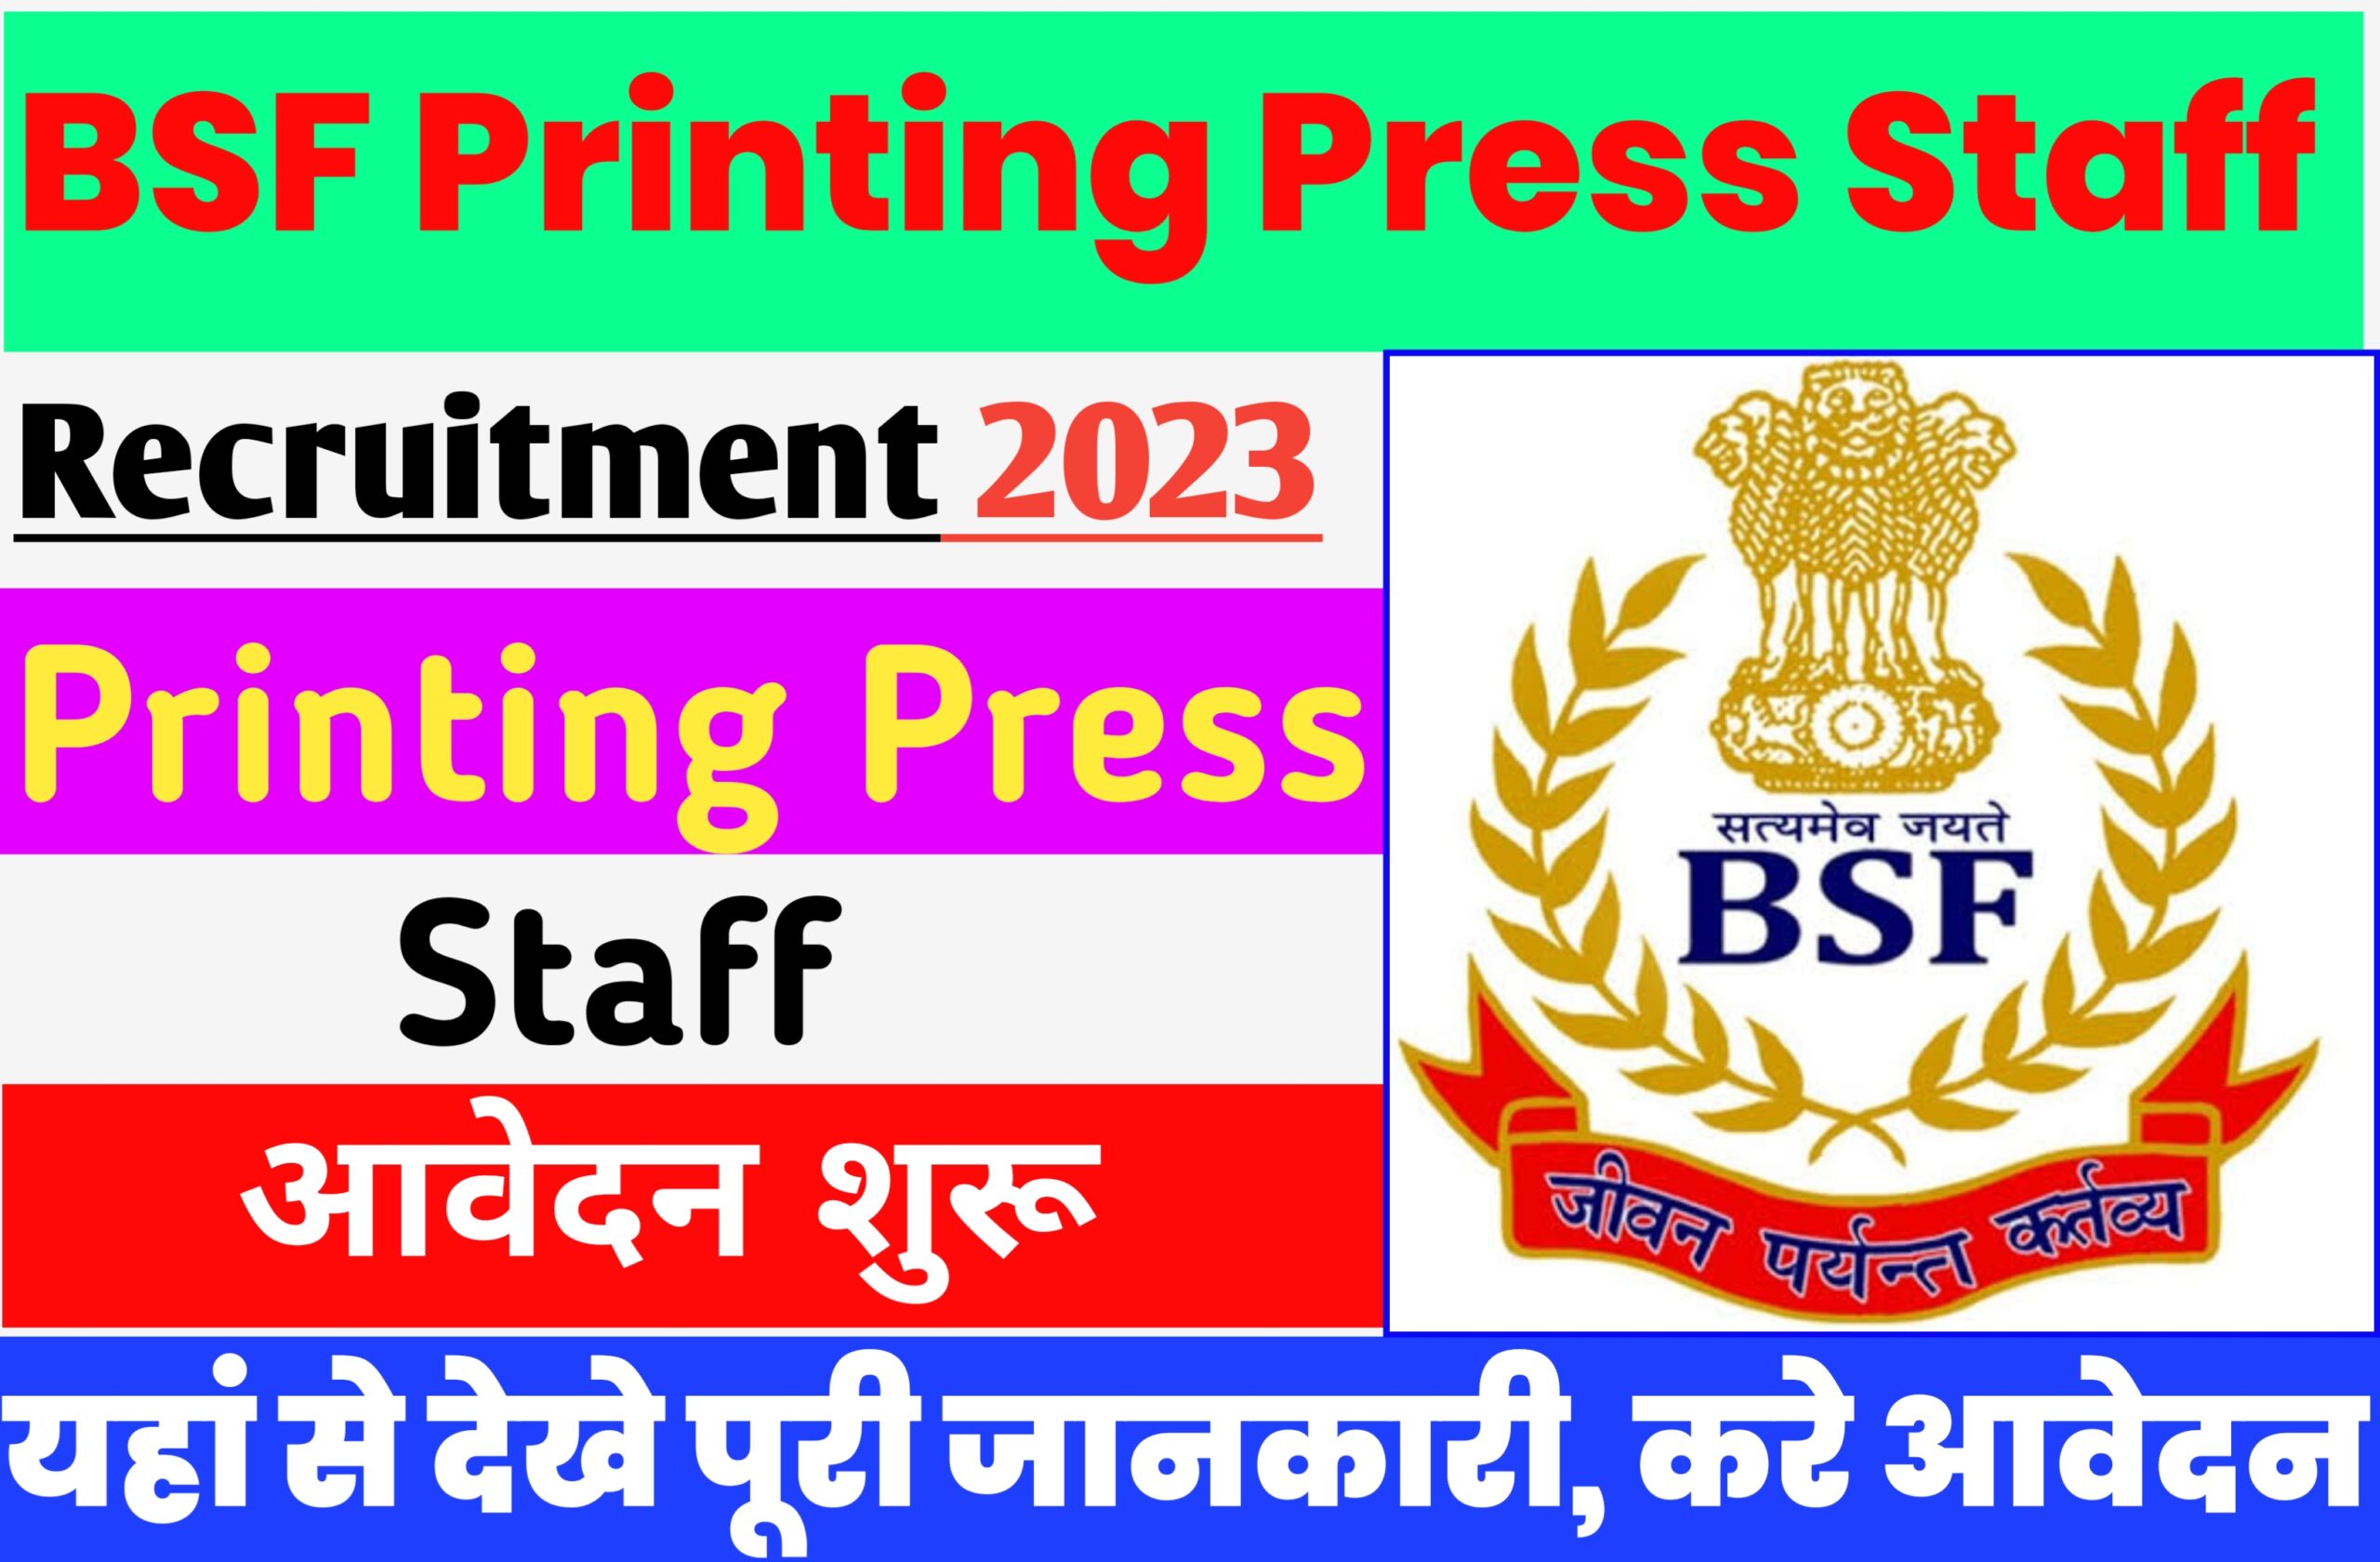 BSF Printing Press Staff Vacancy 2023